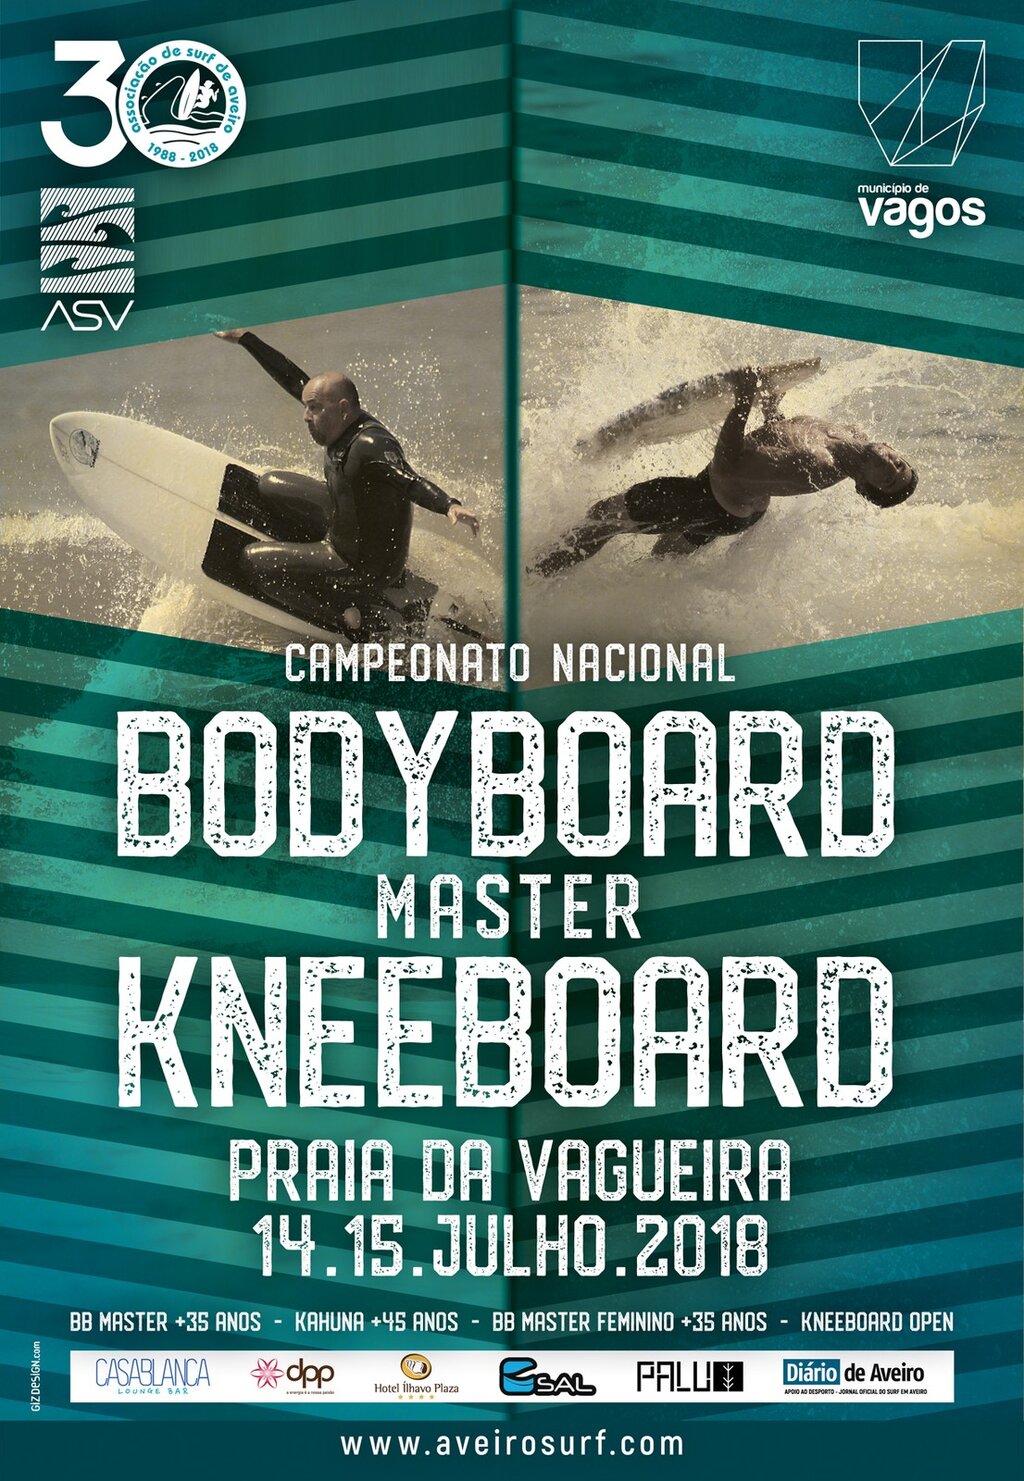 Campeonato Nacional de Bodyboard e Kneeboard Master